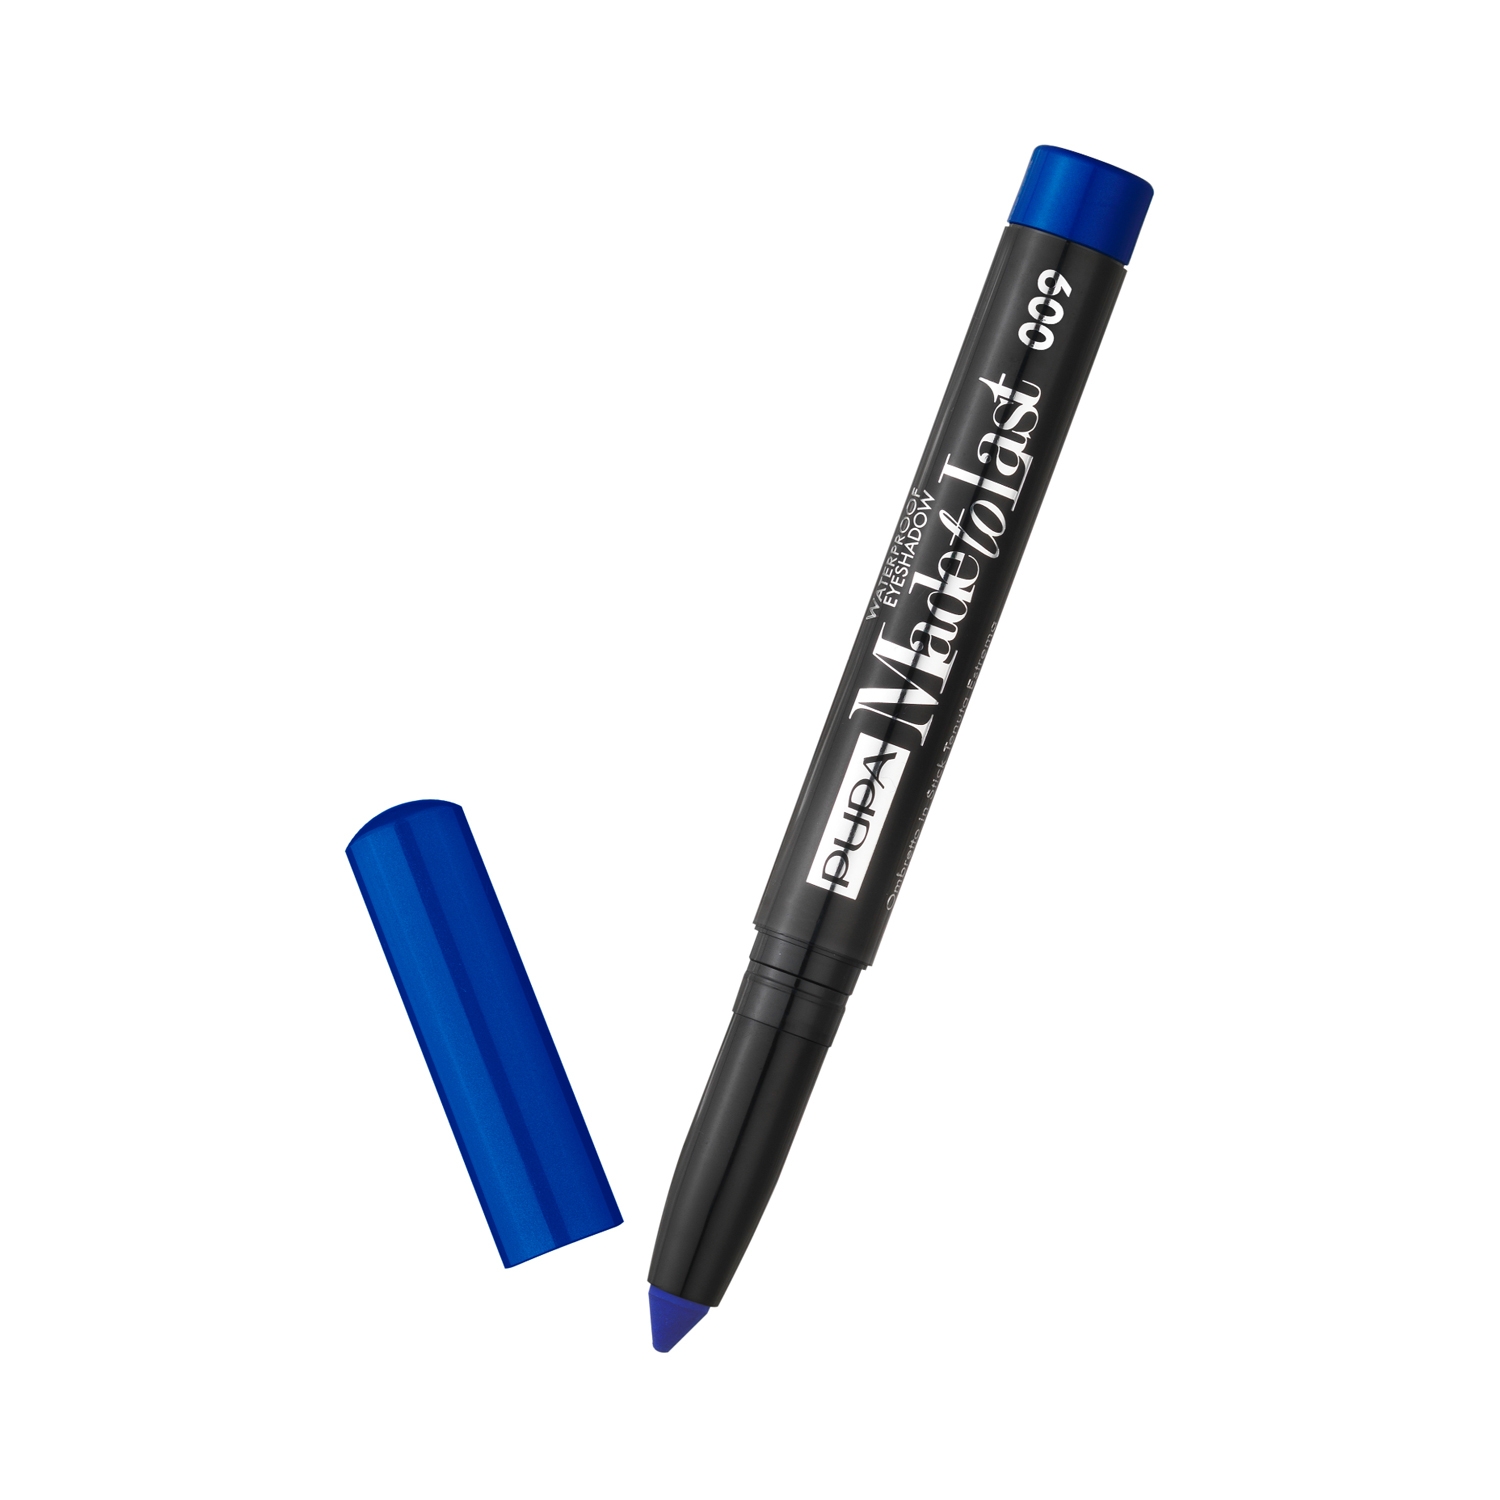 Pupa Milano | Pupa Milano Made To Last Waterproof Long Lasting Stick Eyeshadow - 009 Atlantic Blue (1.4g)